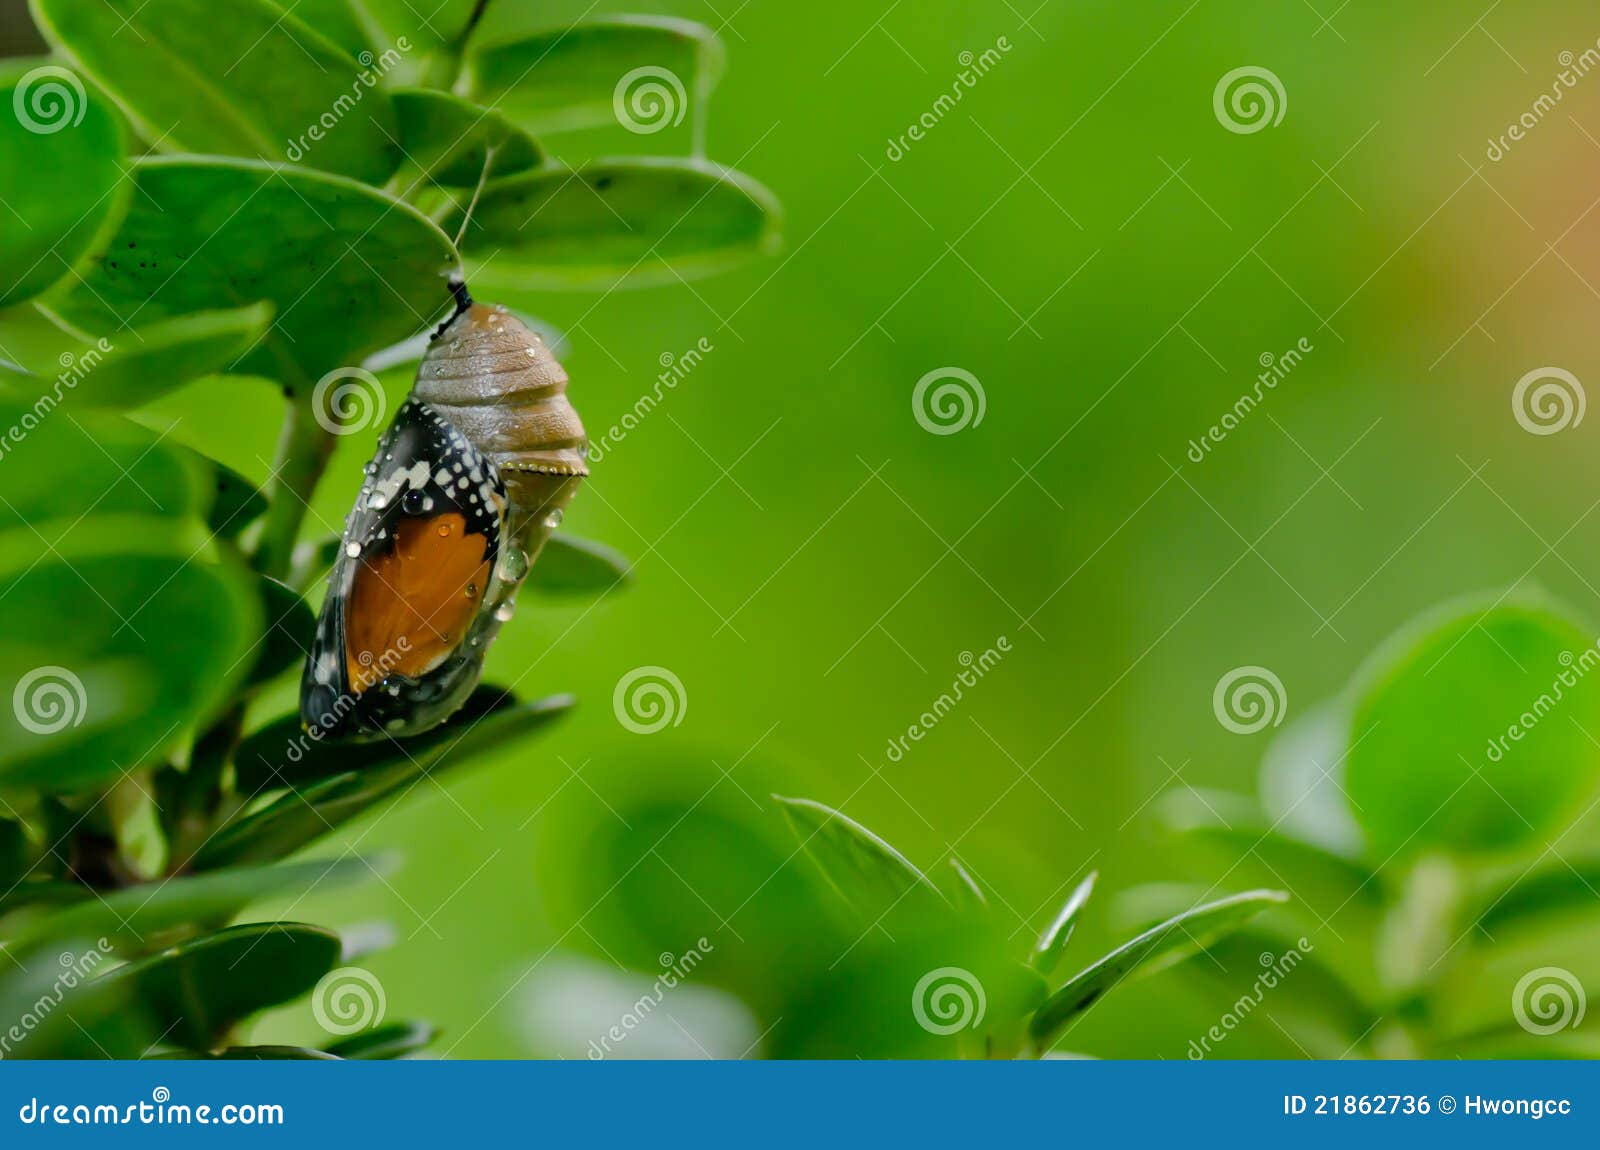 pupa plain tiger butterfly